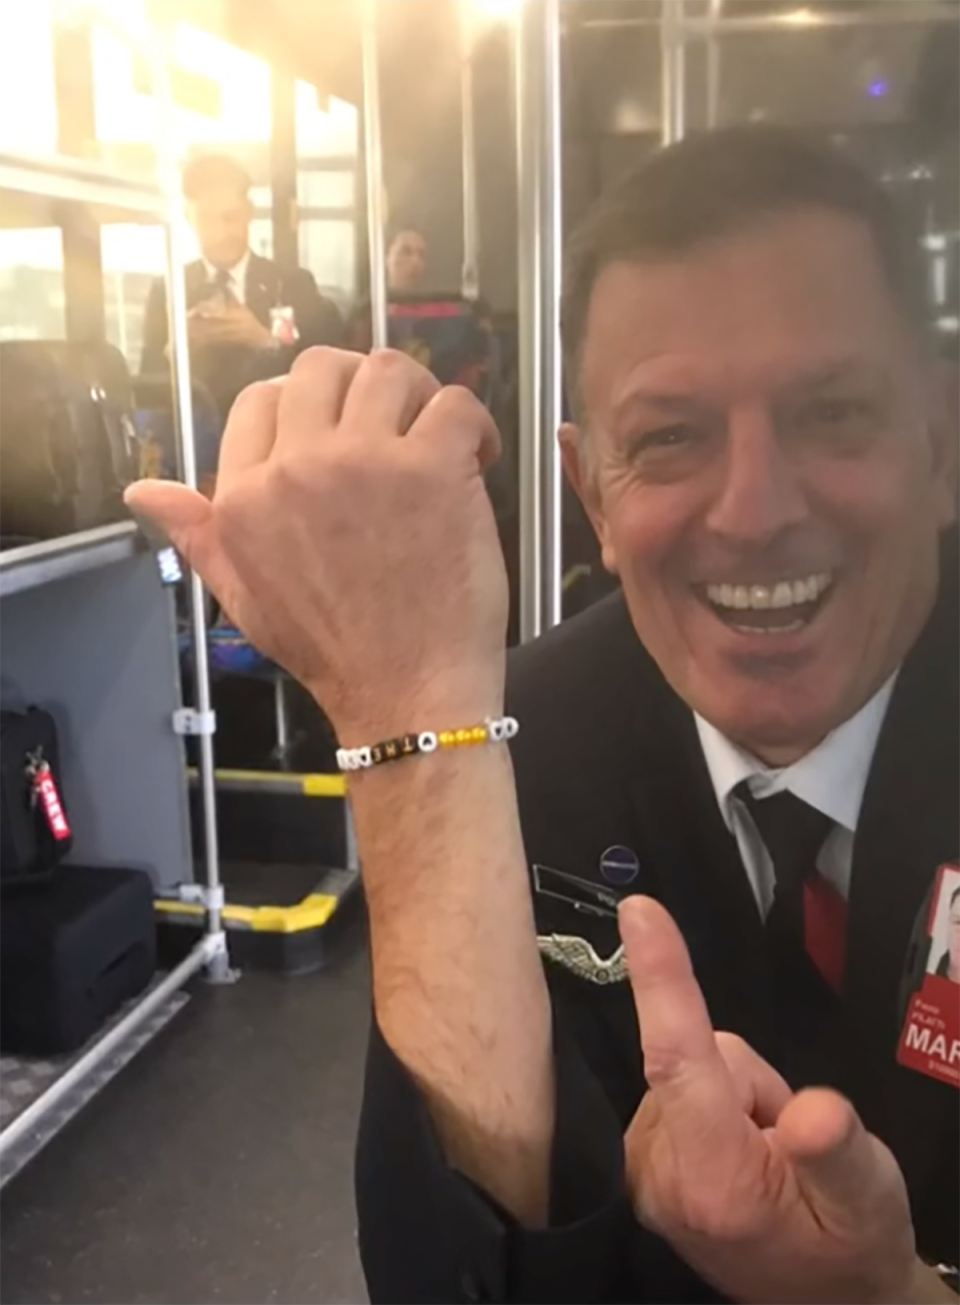 Qantas cabin crew member Paul Pillati posing with a friendship bracelet.